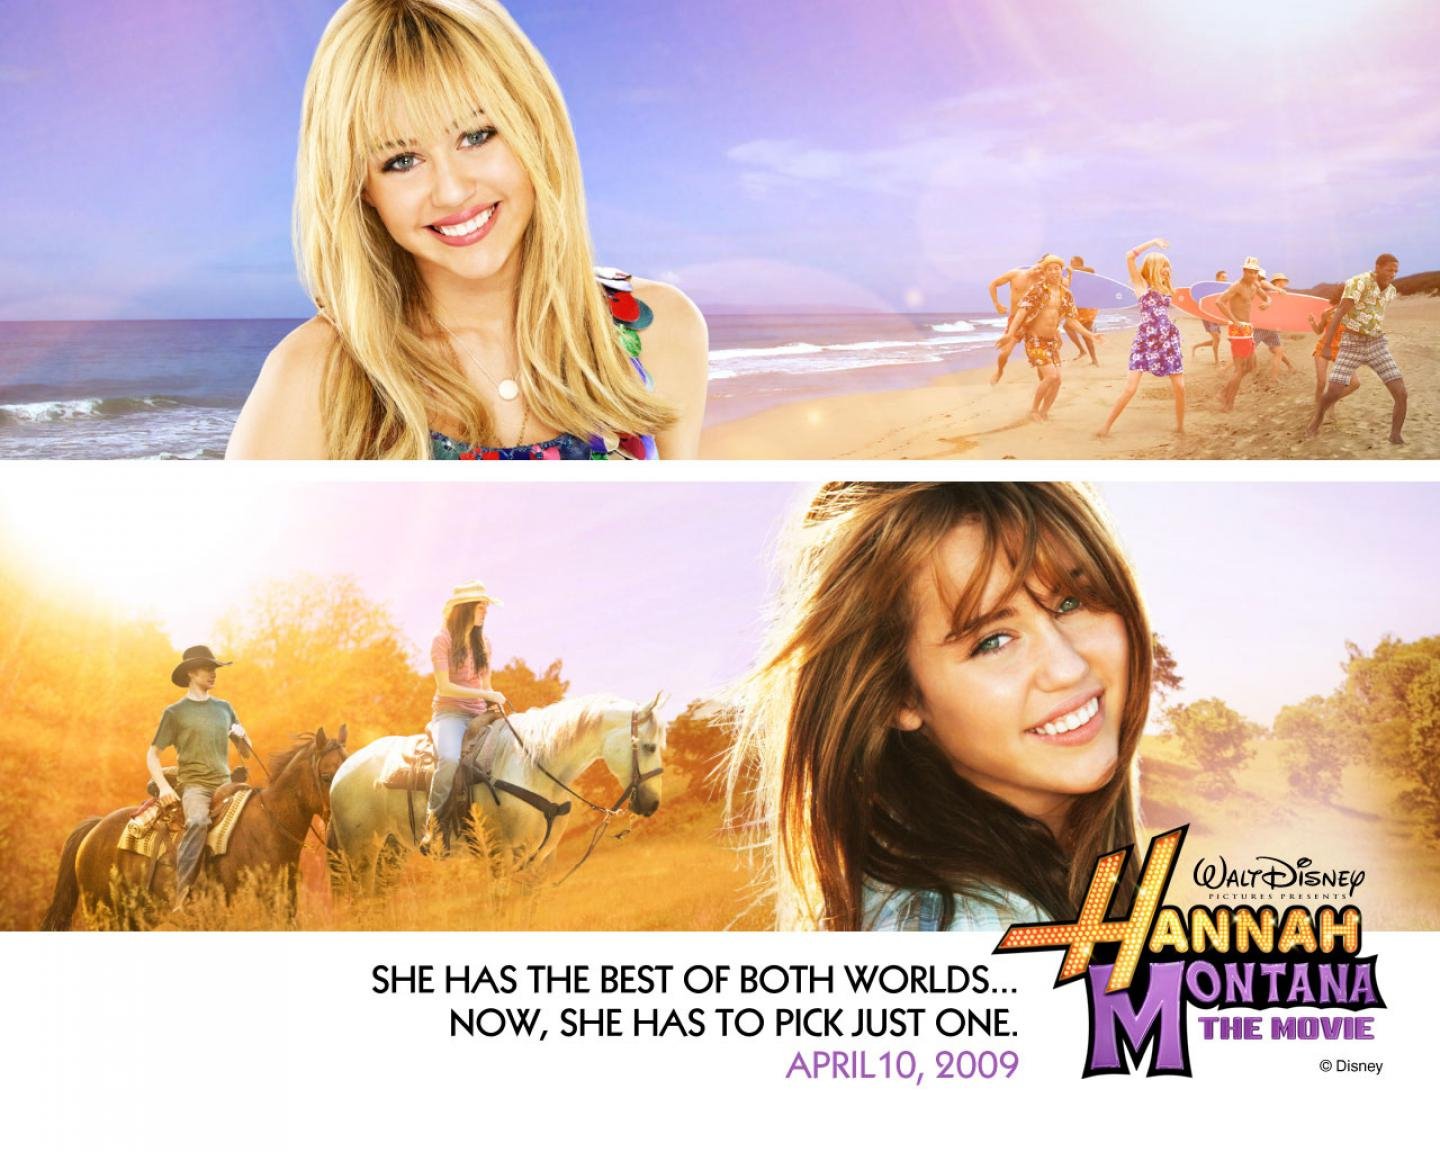 Hannah Montana season 2 exclusive wallpapers as a part of 100 days of hannah  by Dj   Hannah Montana Wallpaper 14580438  Fanpop